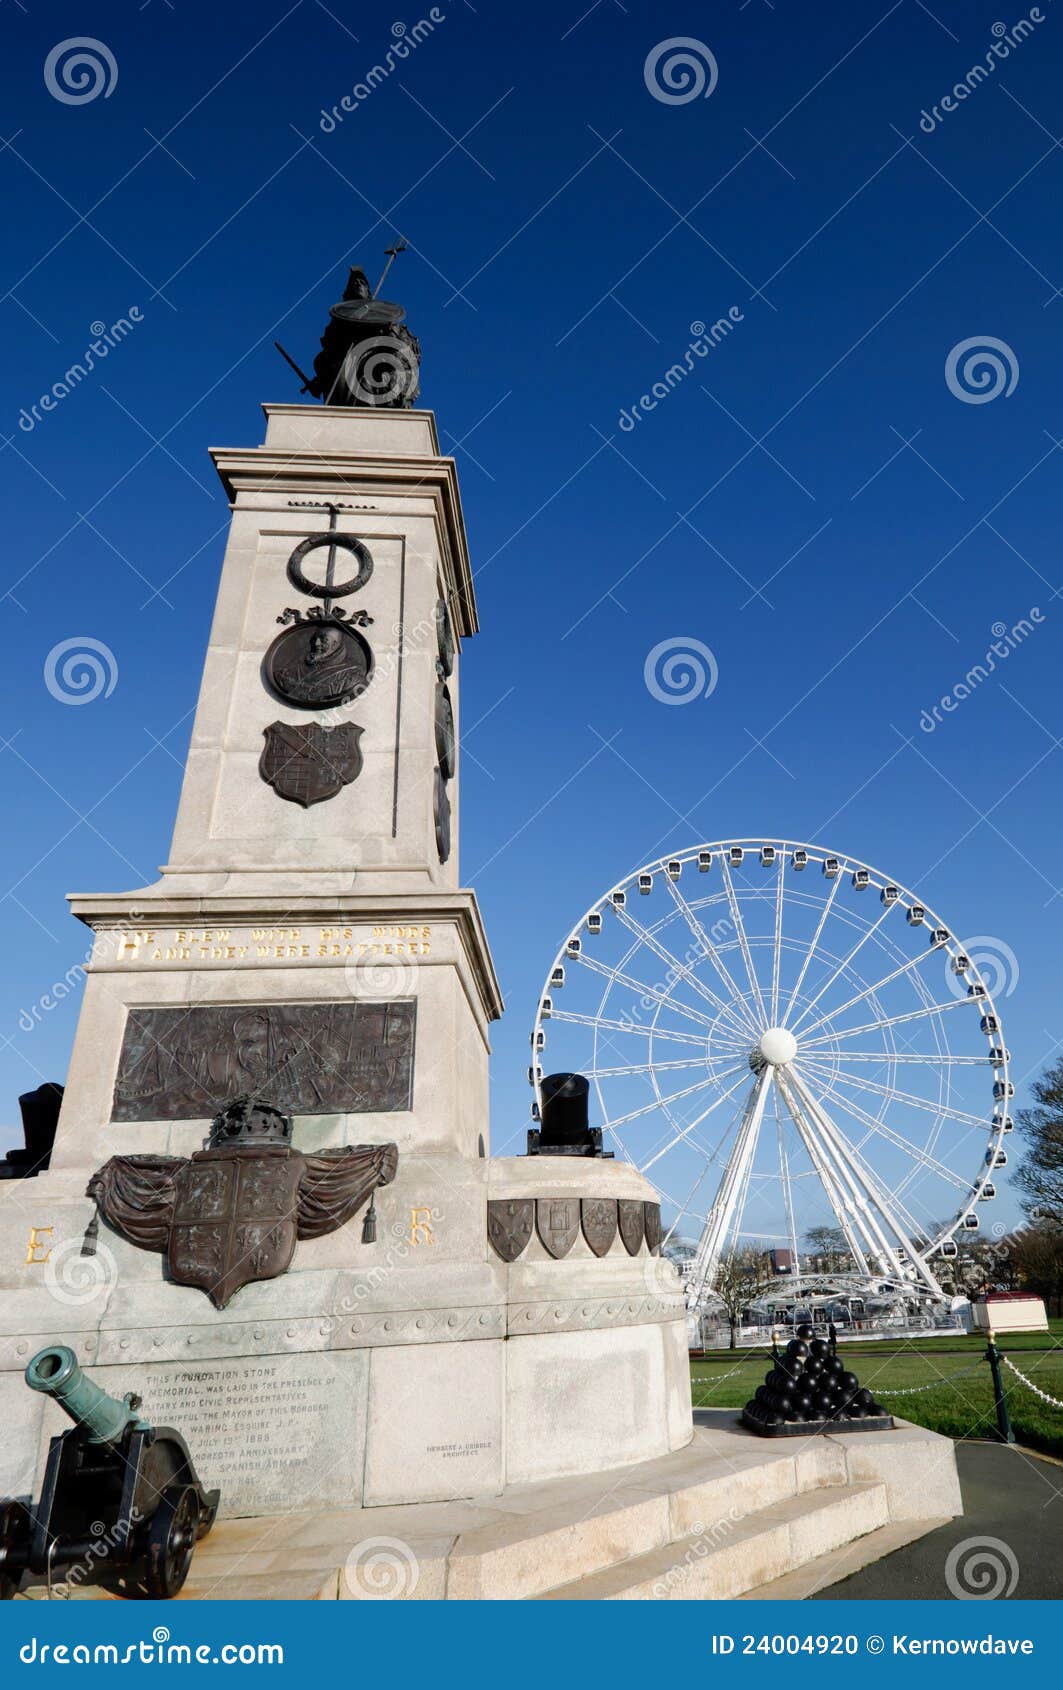 spanish armada monument and plymmouth eye